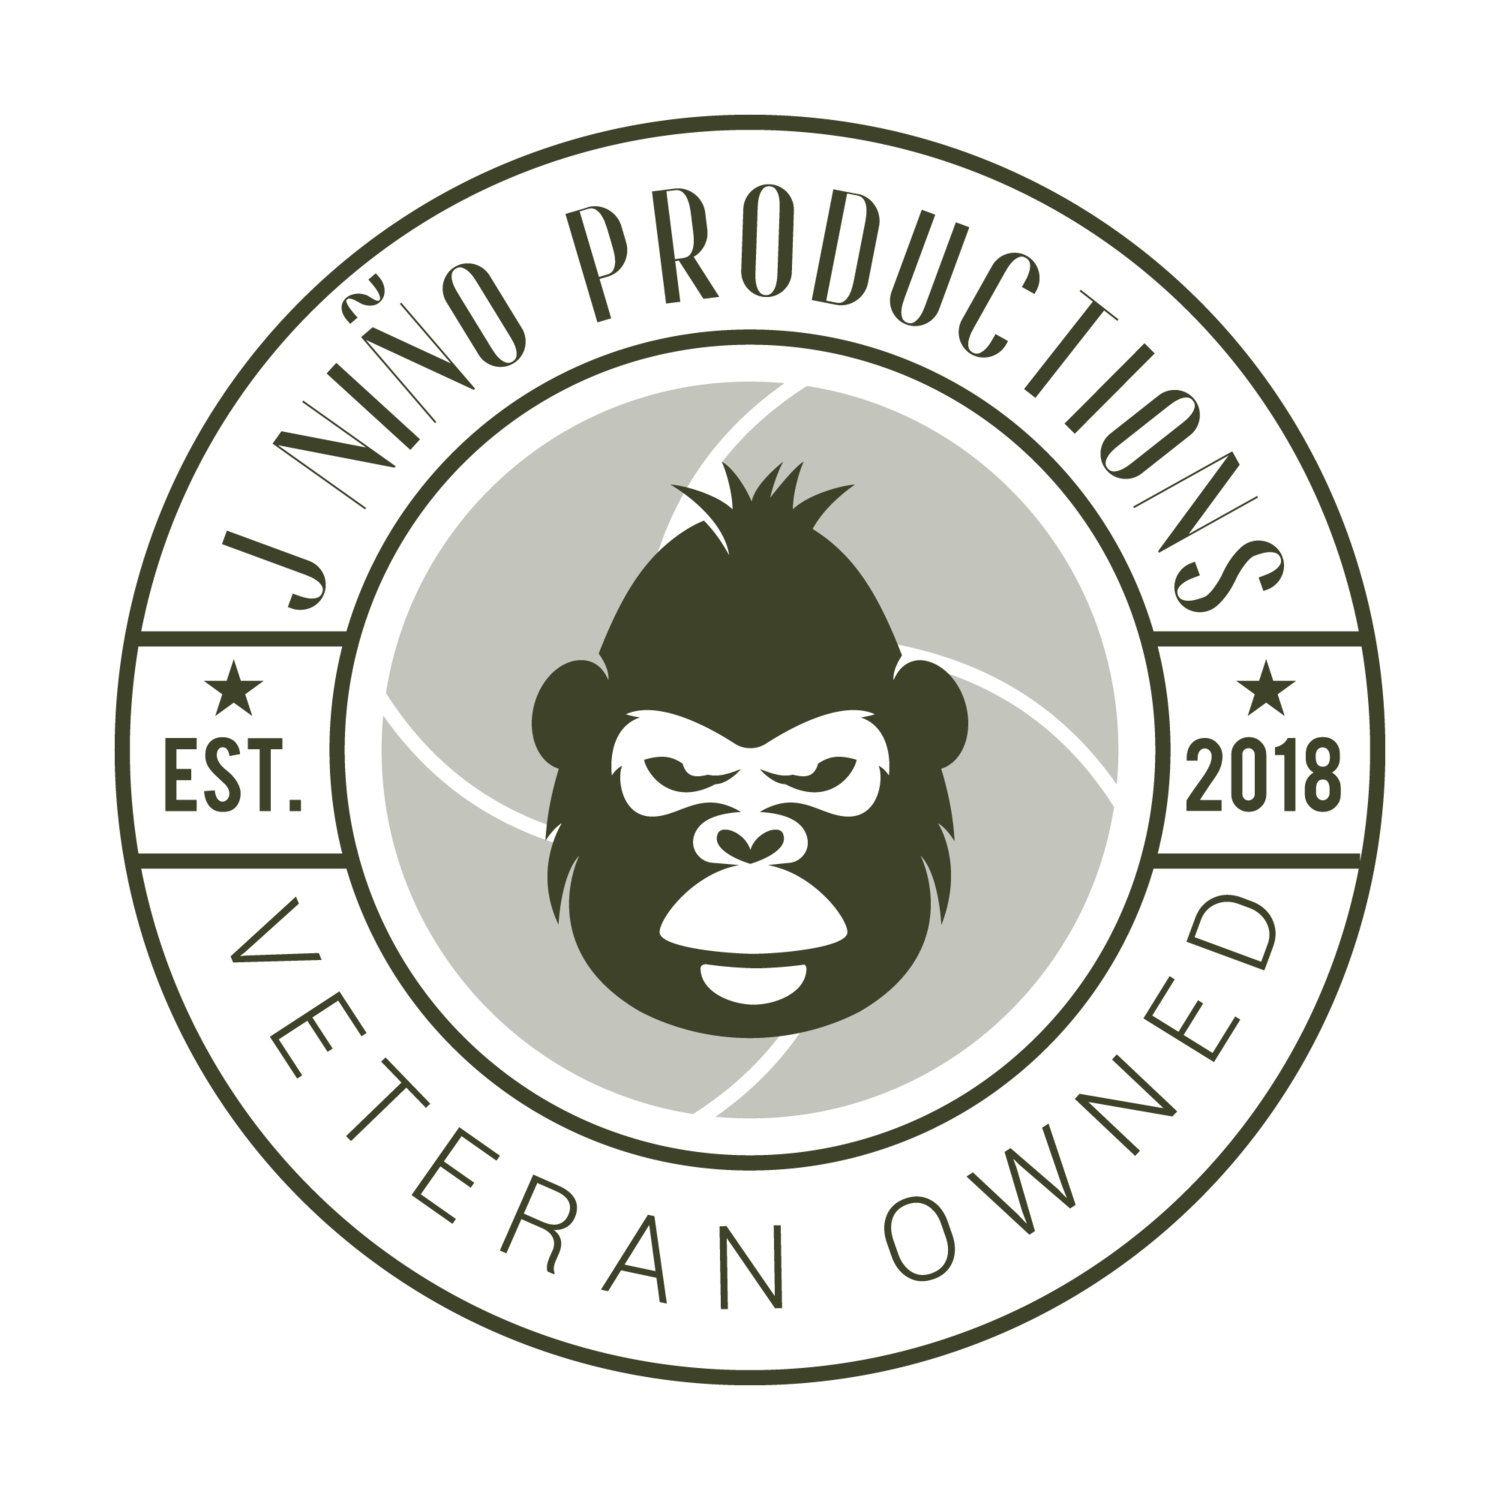 Jnino Productions